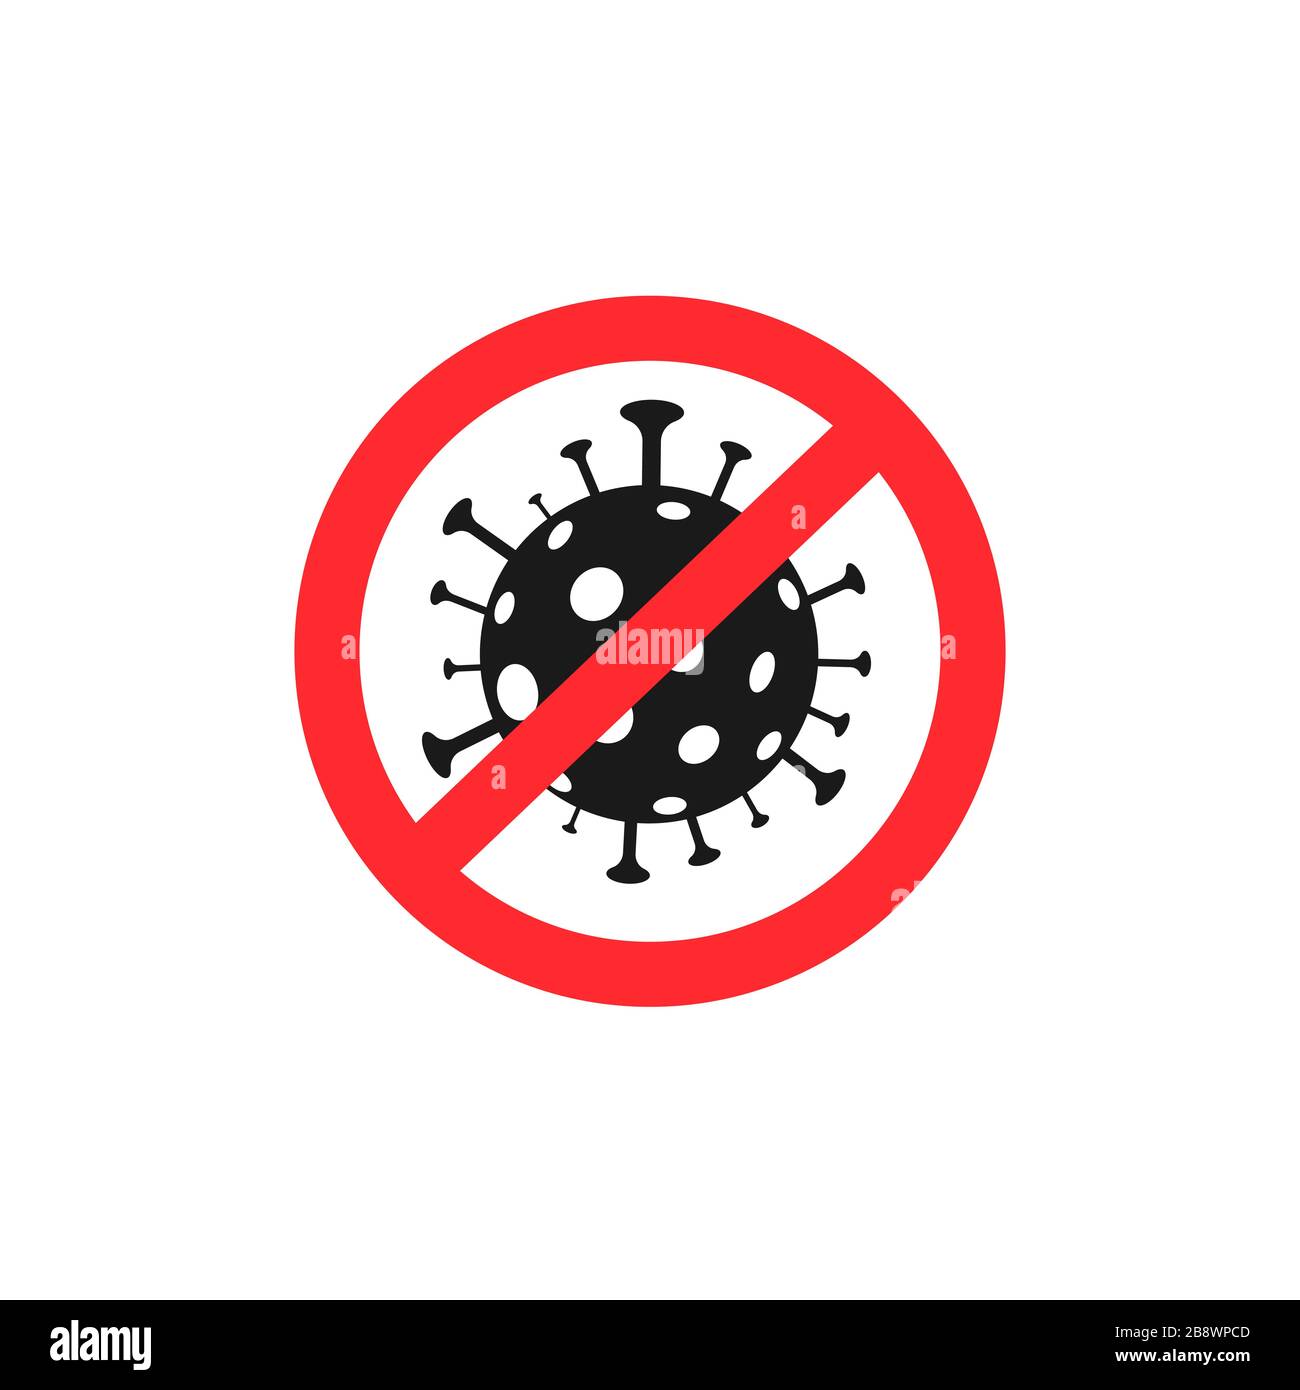 Coronavirus Icon with Red Prohibit Sign Stock Vector